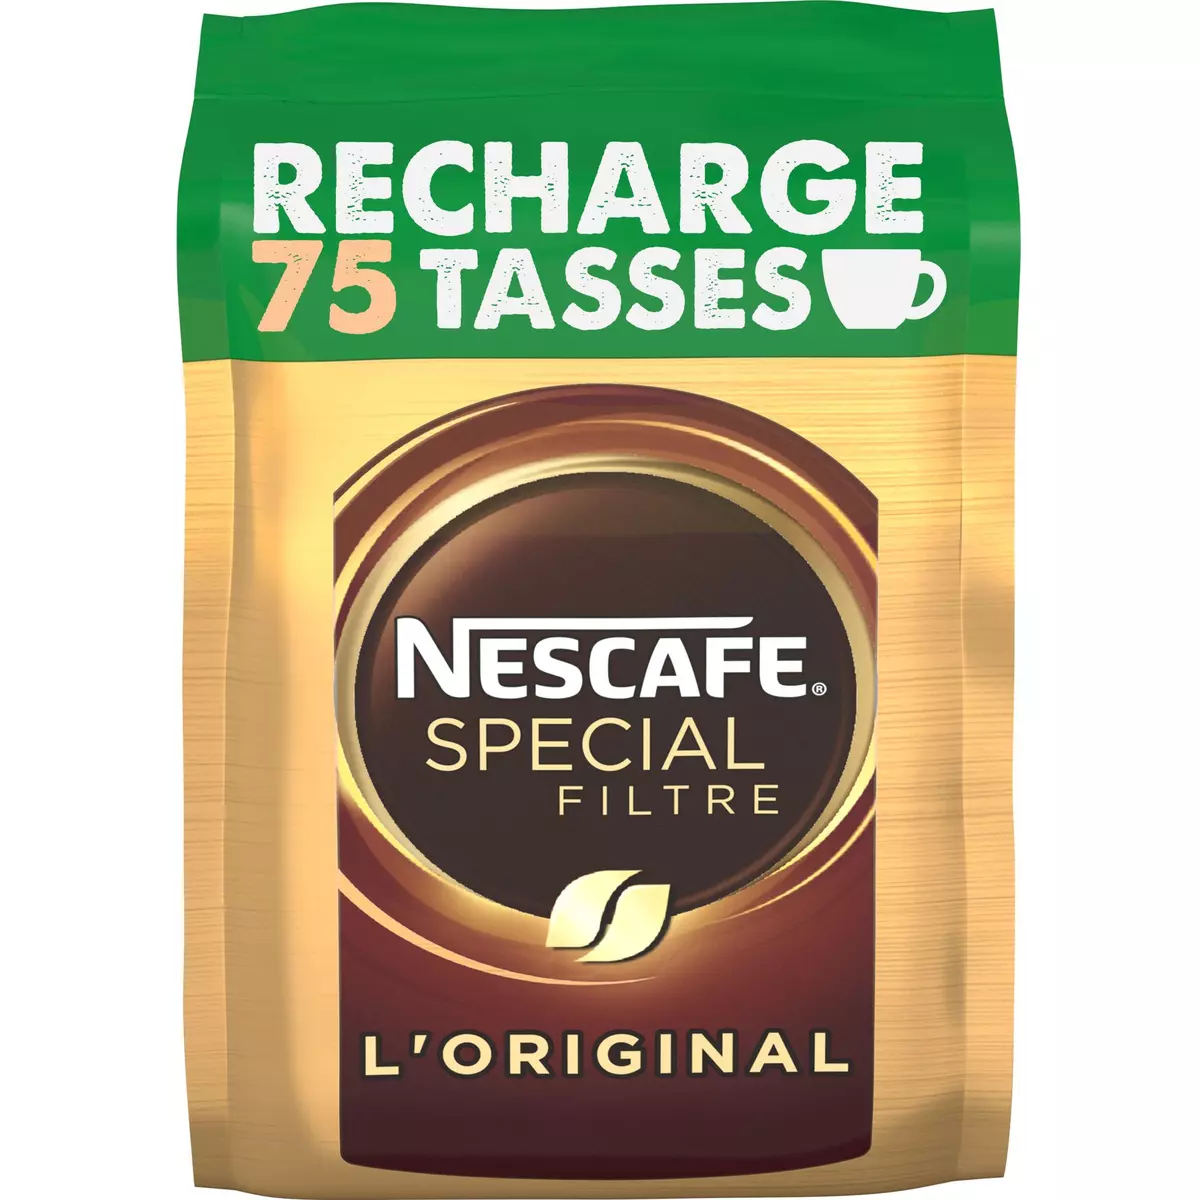 NESCAFE Spécial filtre 75 tasses 150g